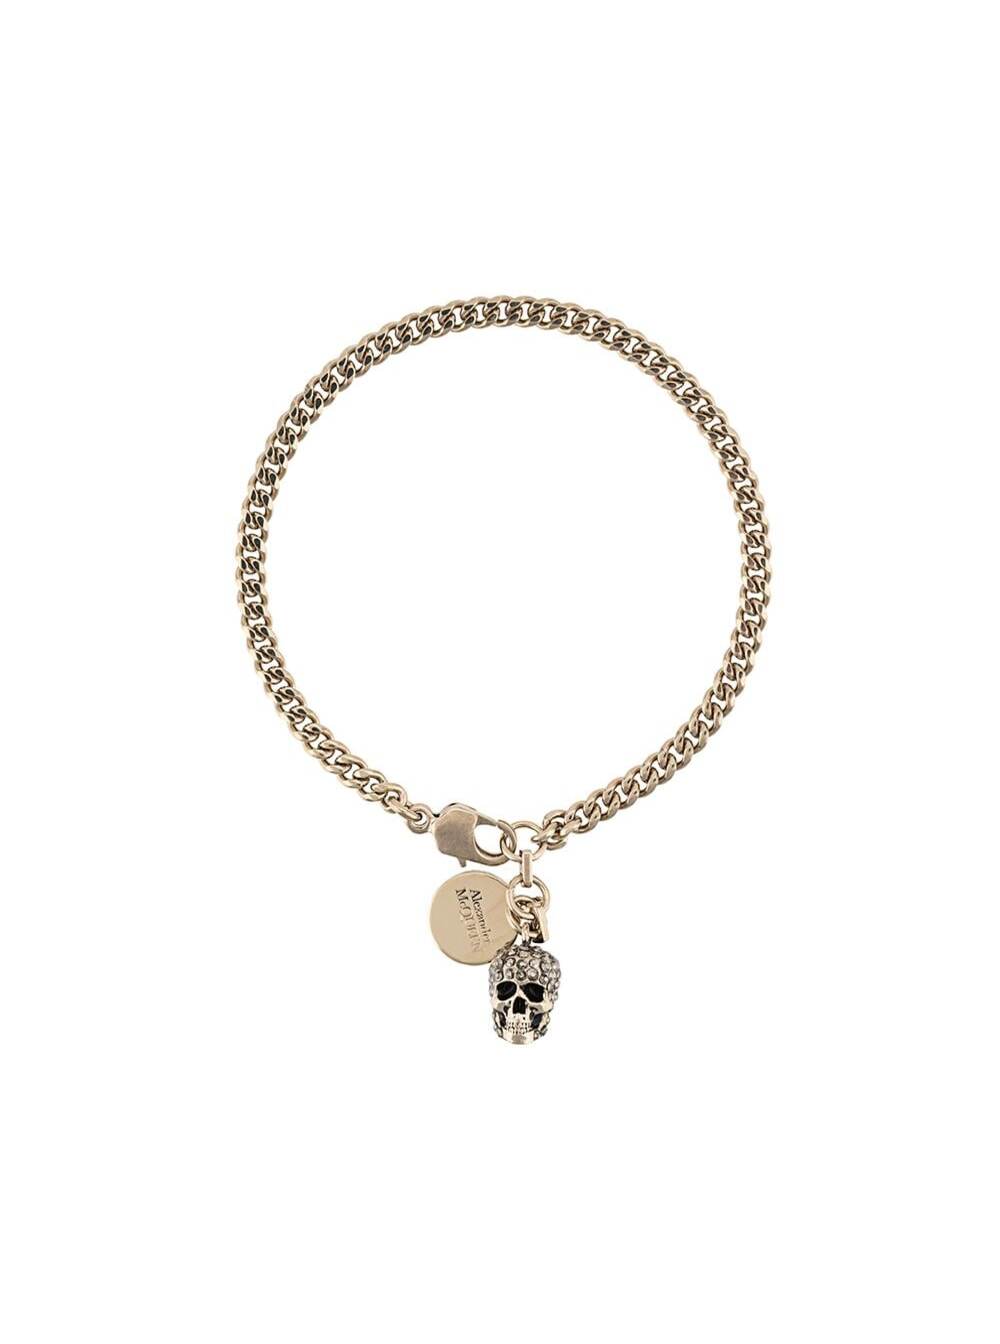 Alexander McQueen Pave Brass Bracelet With Skull Detail